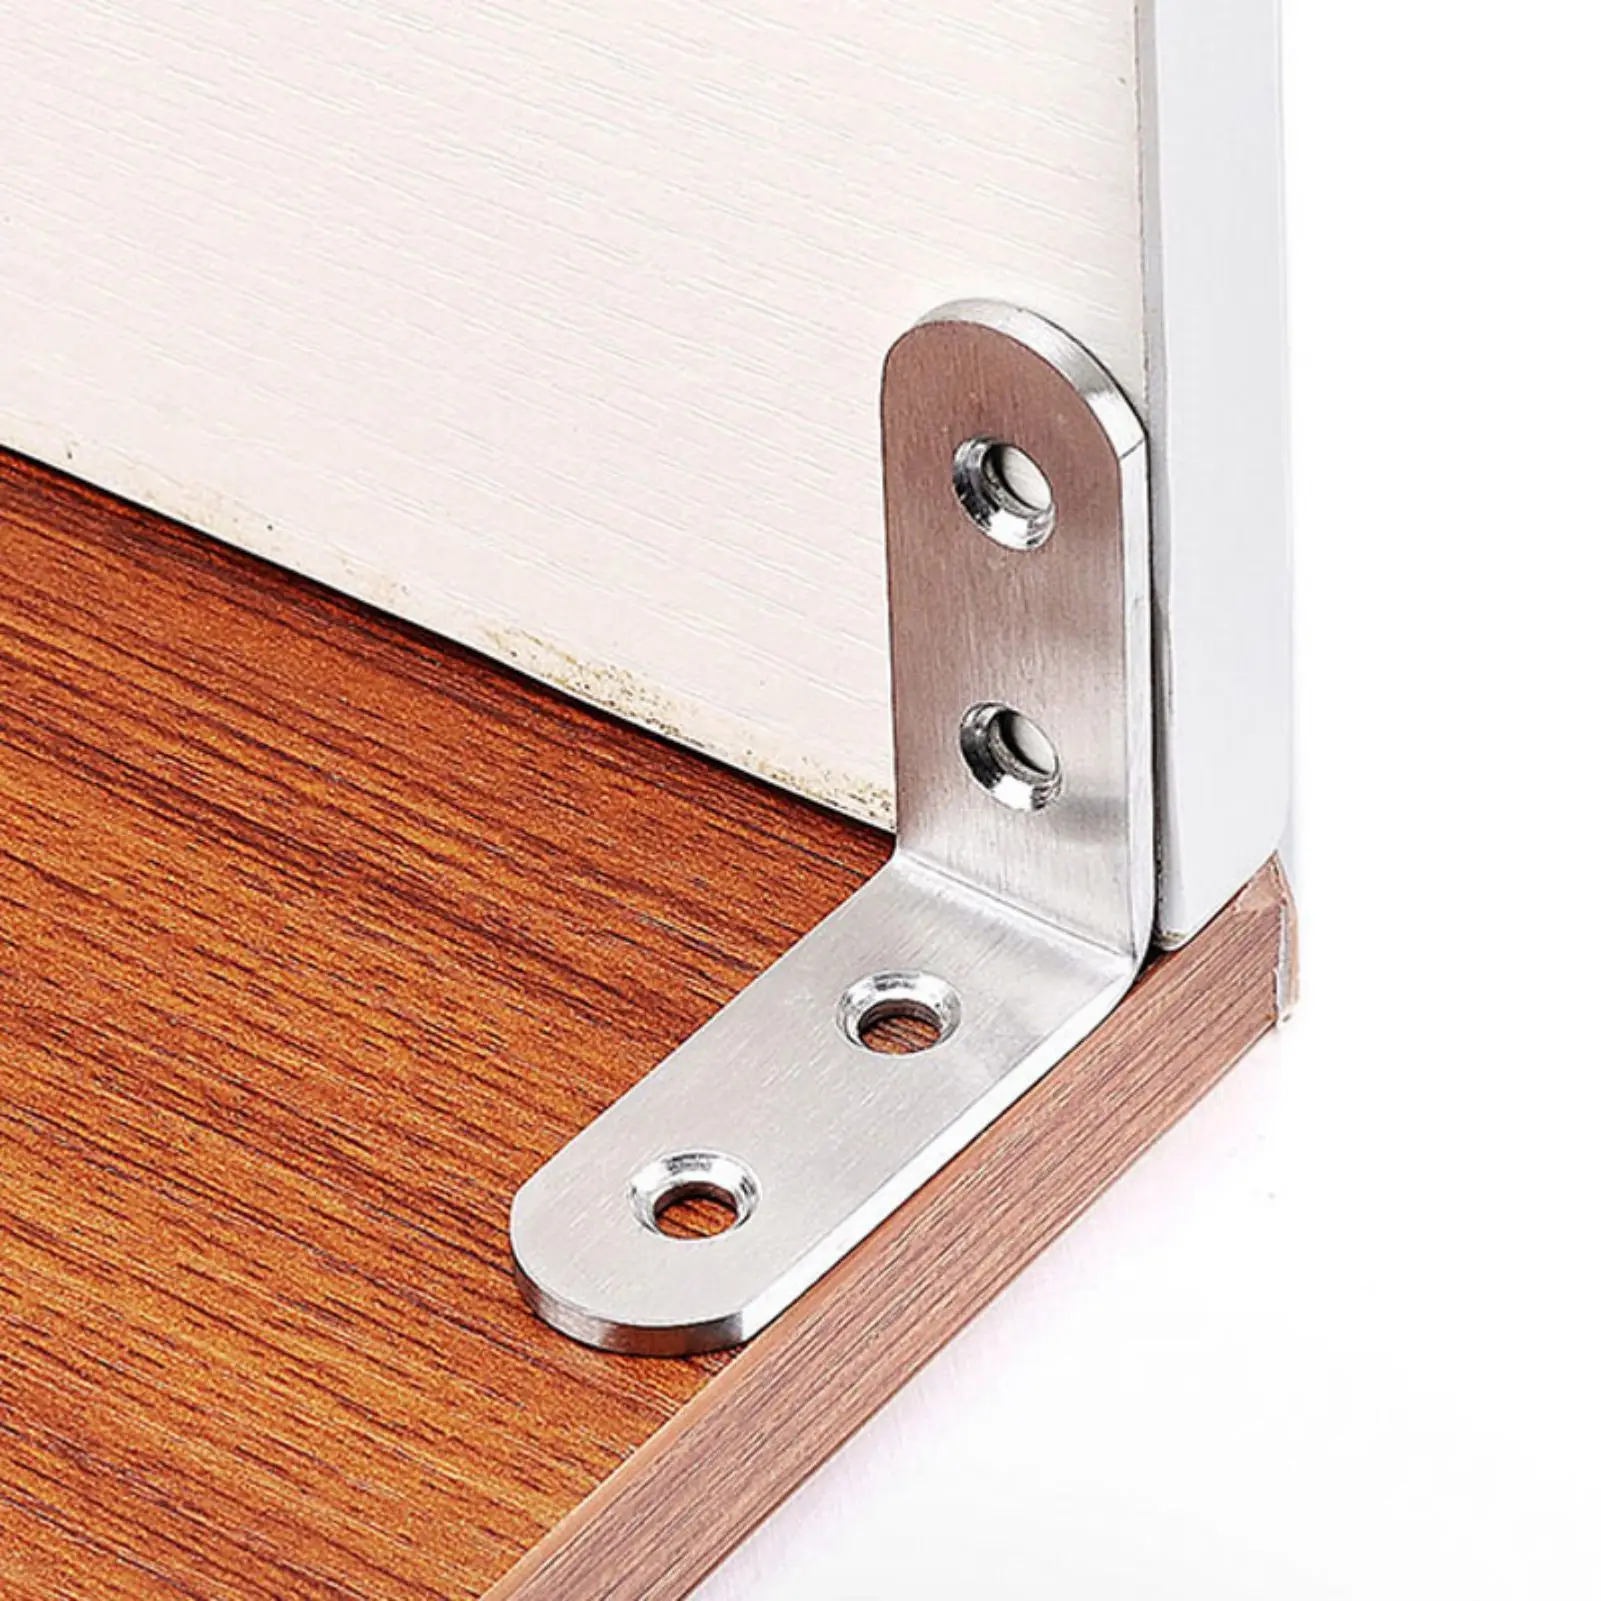 10pcs Stainless Steel Angle Corner Brackets Connector Corner Brace Joint Fastener for Wood Furniture Bedframe Cabinet Drawer